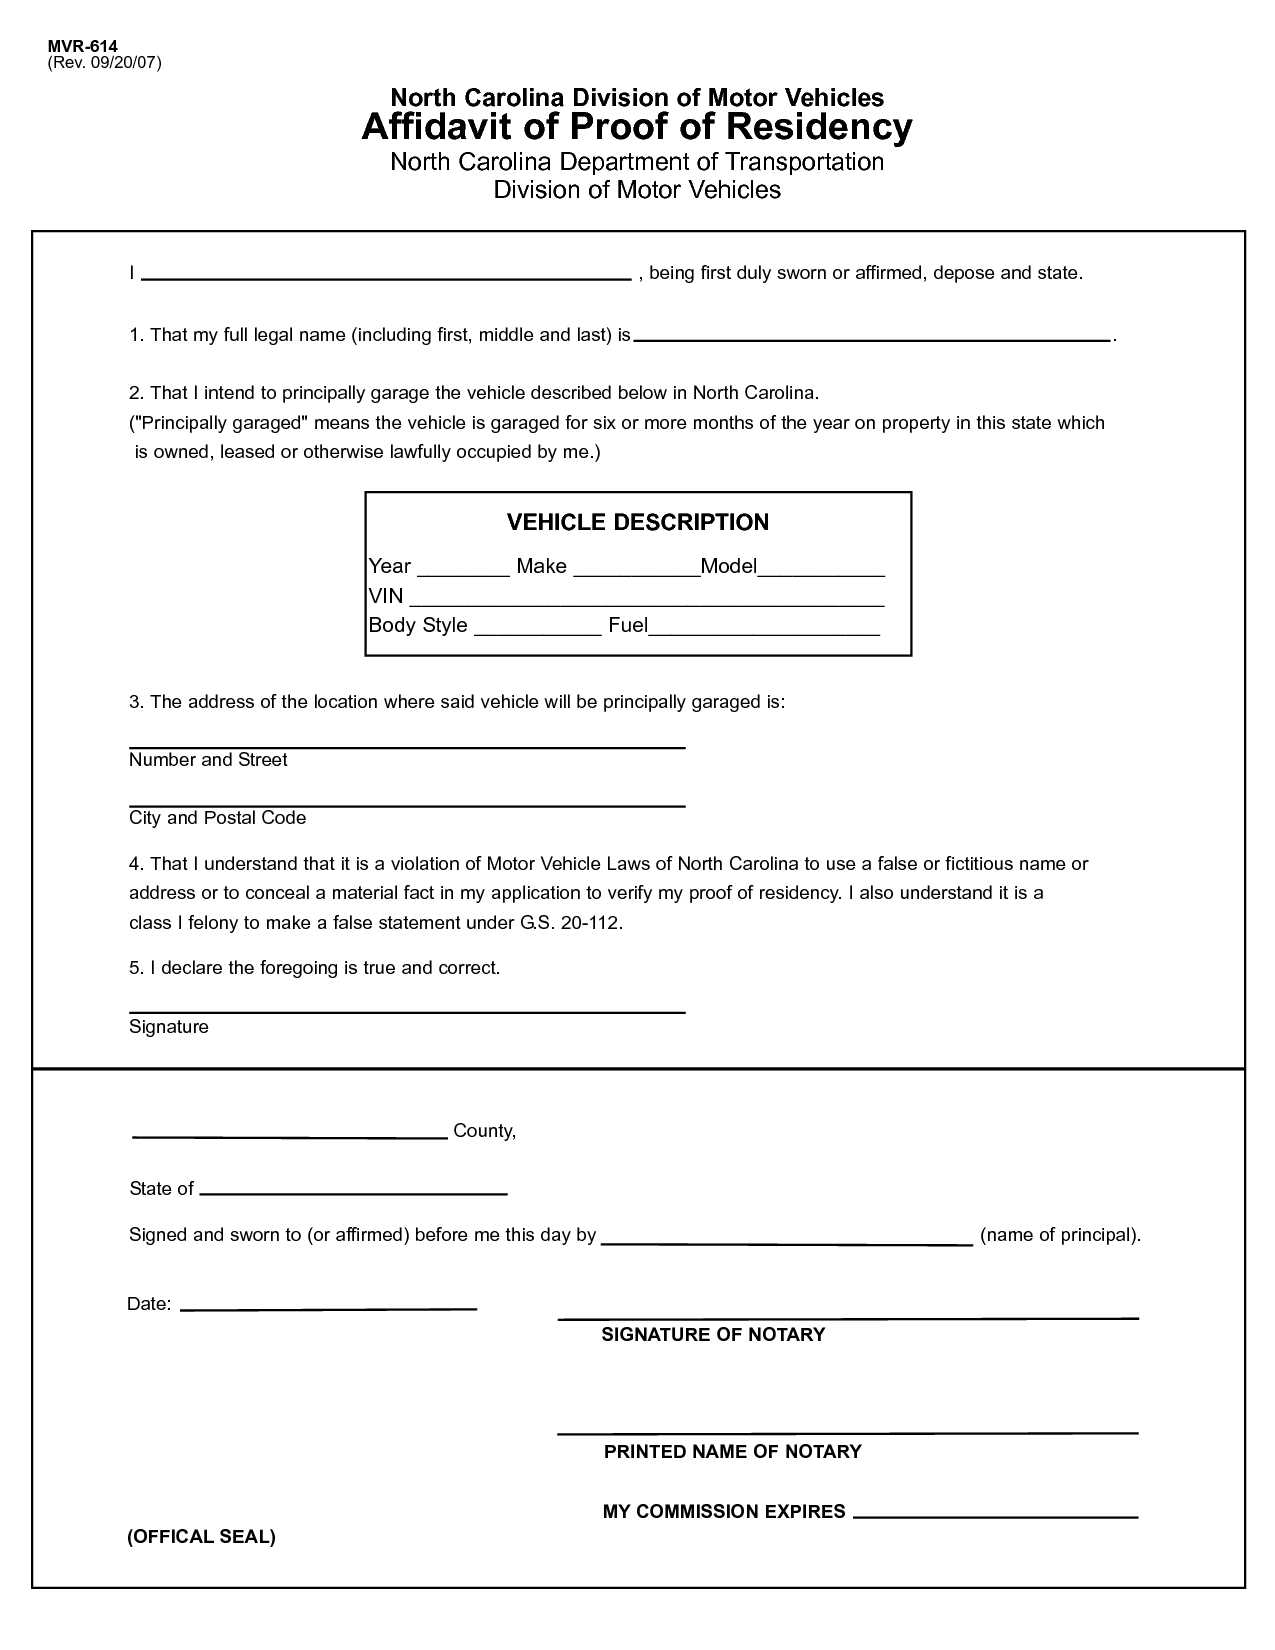 affidavit-of-residency-form-free-printable-documents